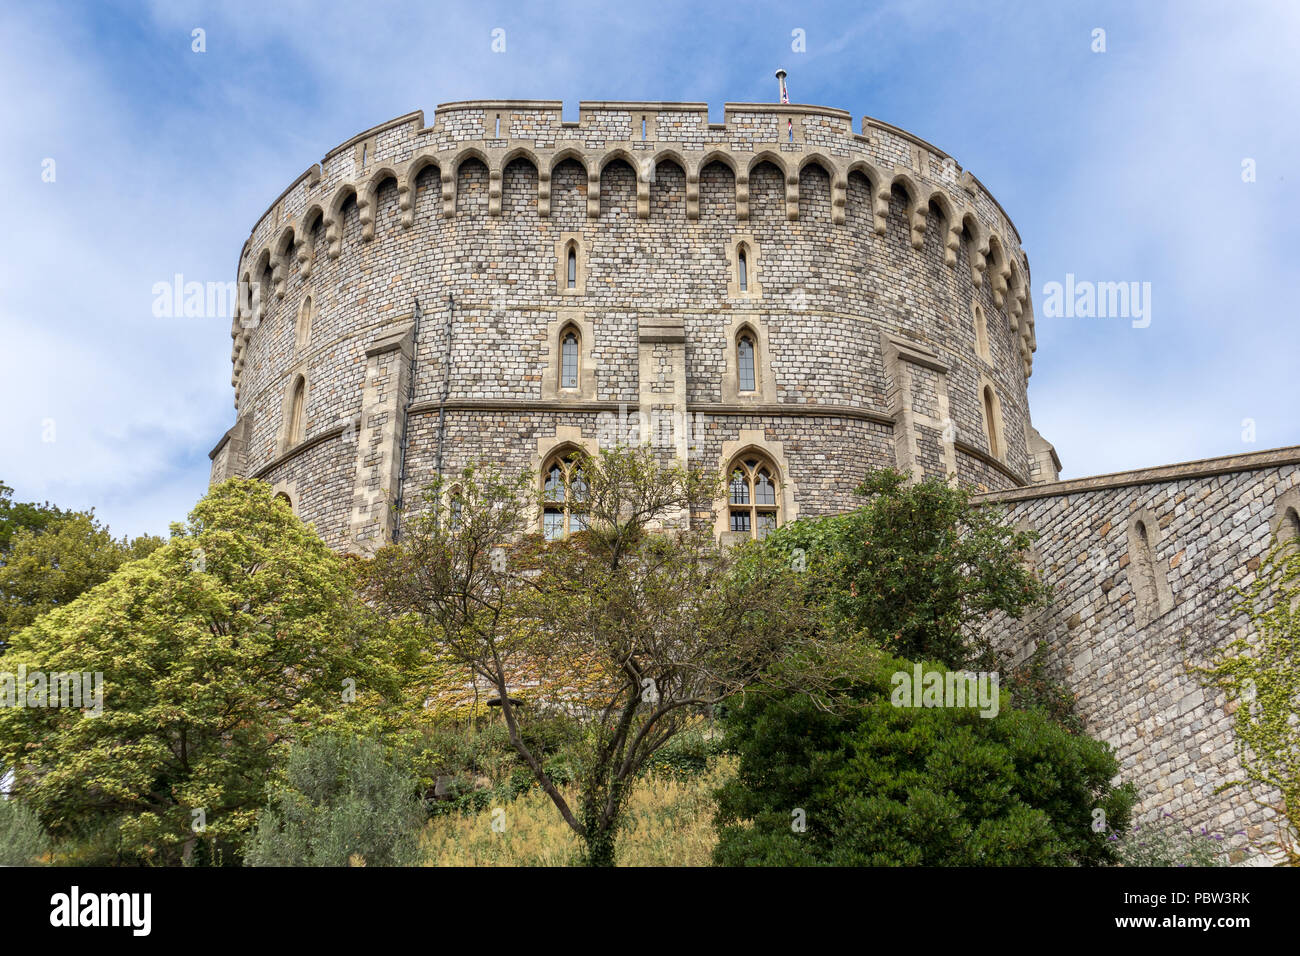 WINDSOR, MAIDENHEAD & WINDSOR/UK - JULY 22 : View of Windsor Castle at Windsor, Maidenhead & Windsor on July 22, 2018 Stock Photo